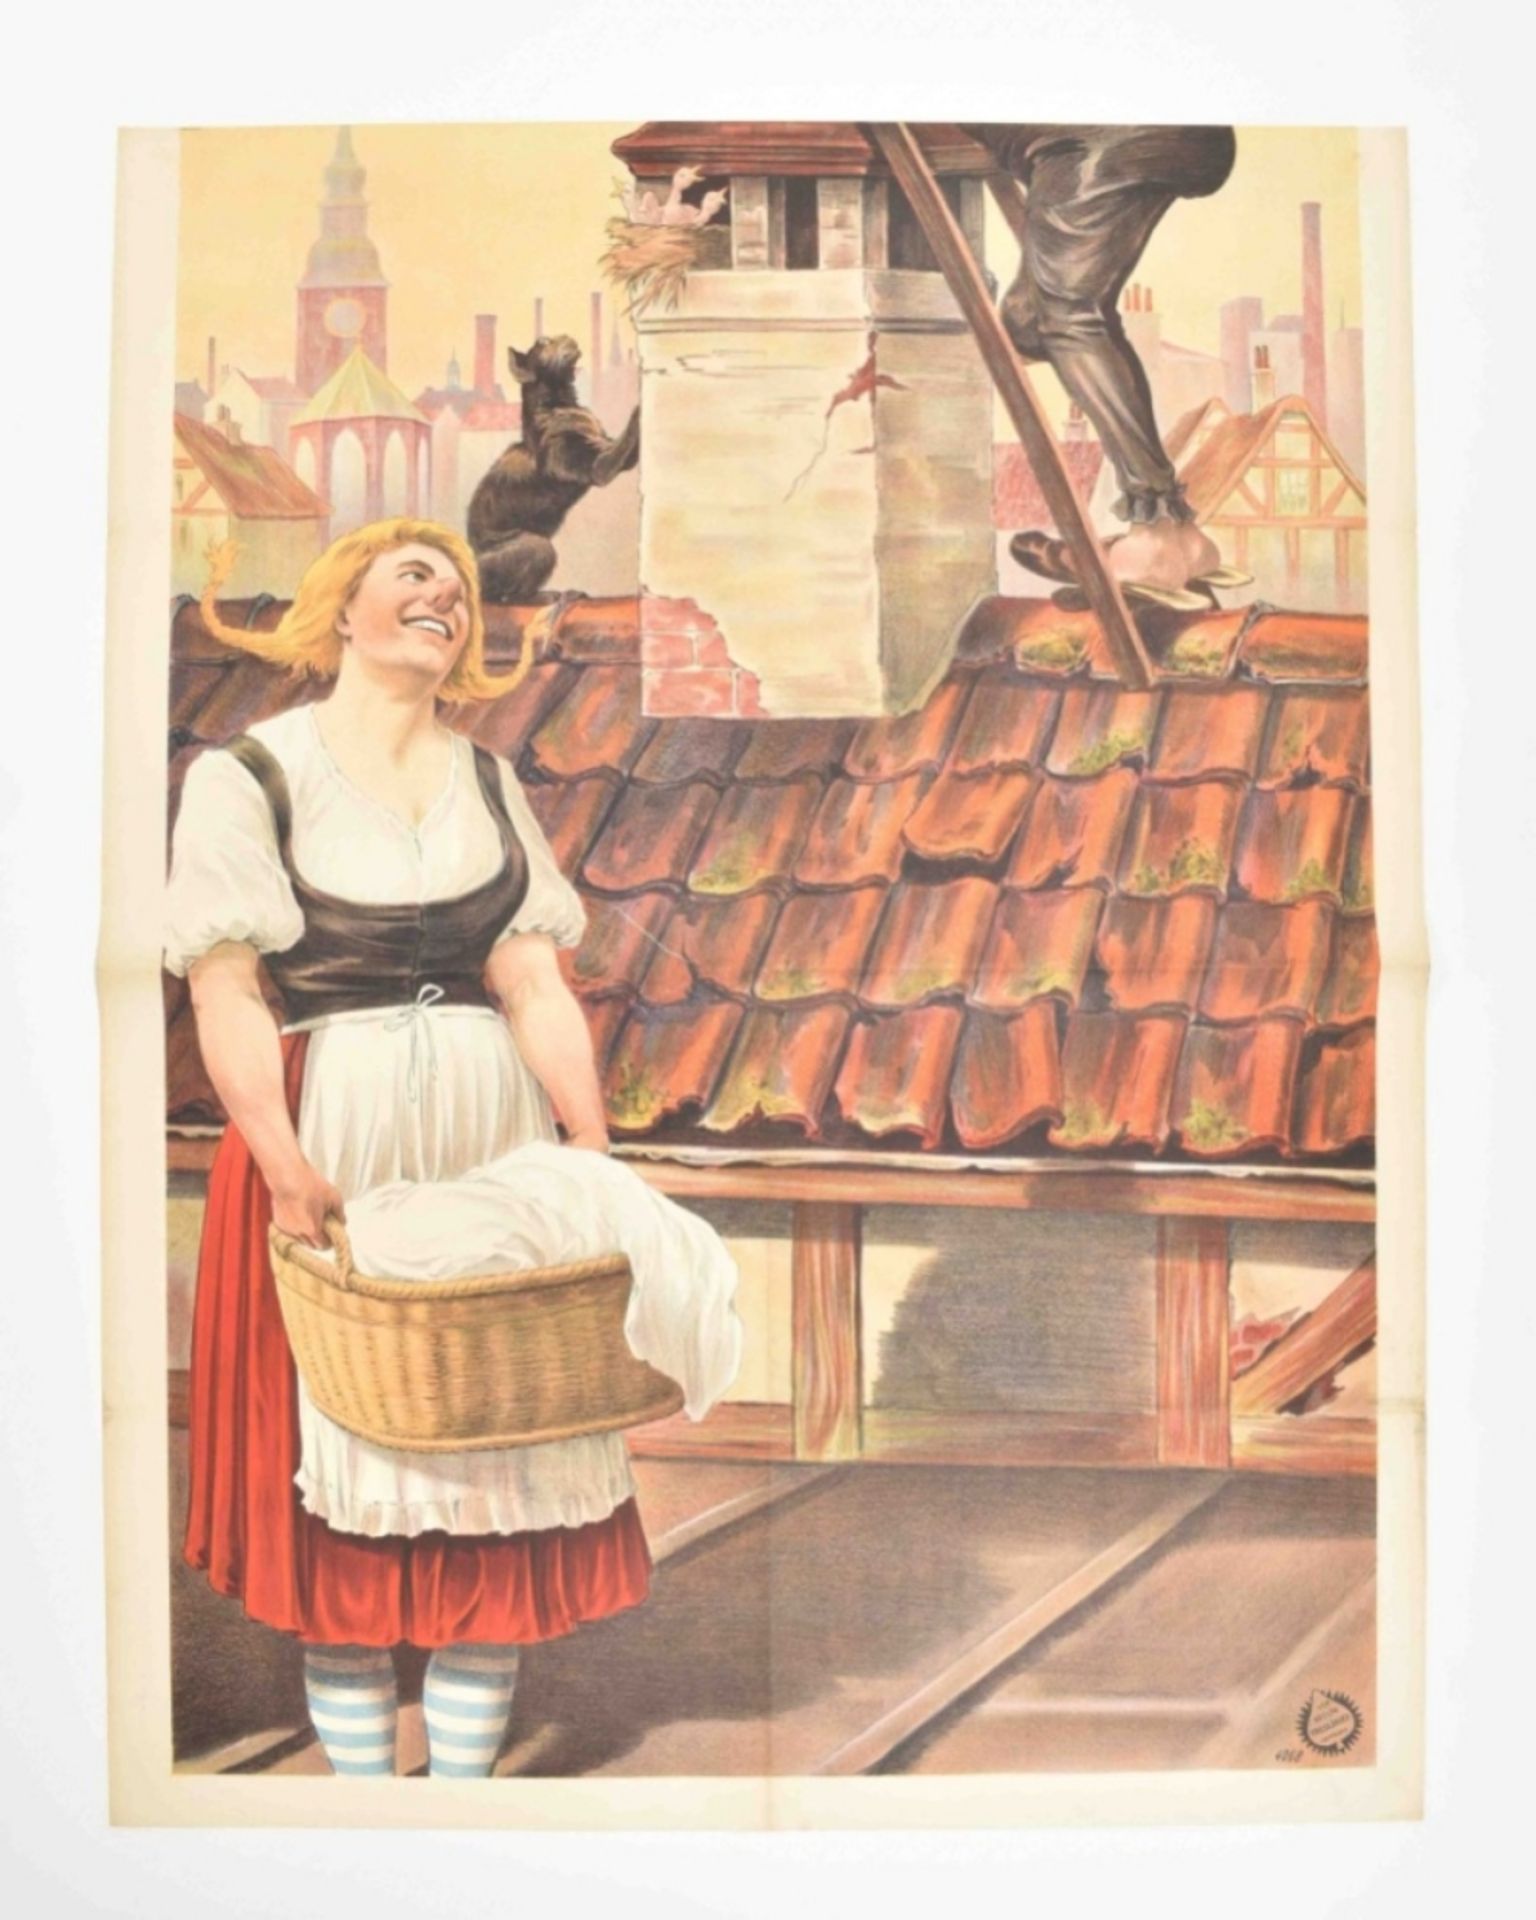 [Clowns] [Vaudeville. Chimney Sweepers. Acrobatics] Chas. Grisse trio Friedländer, Hamburg, 1907 - Image 3 of 7